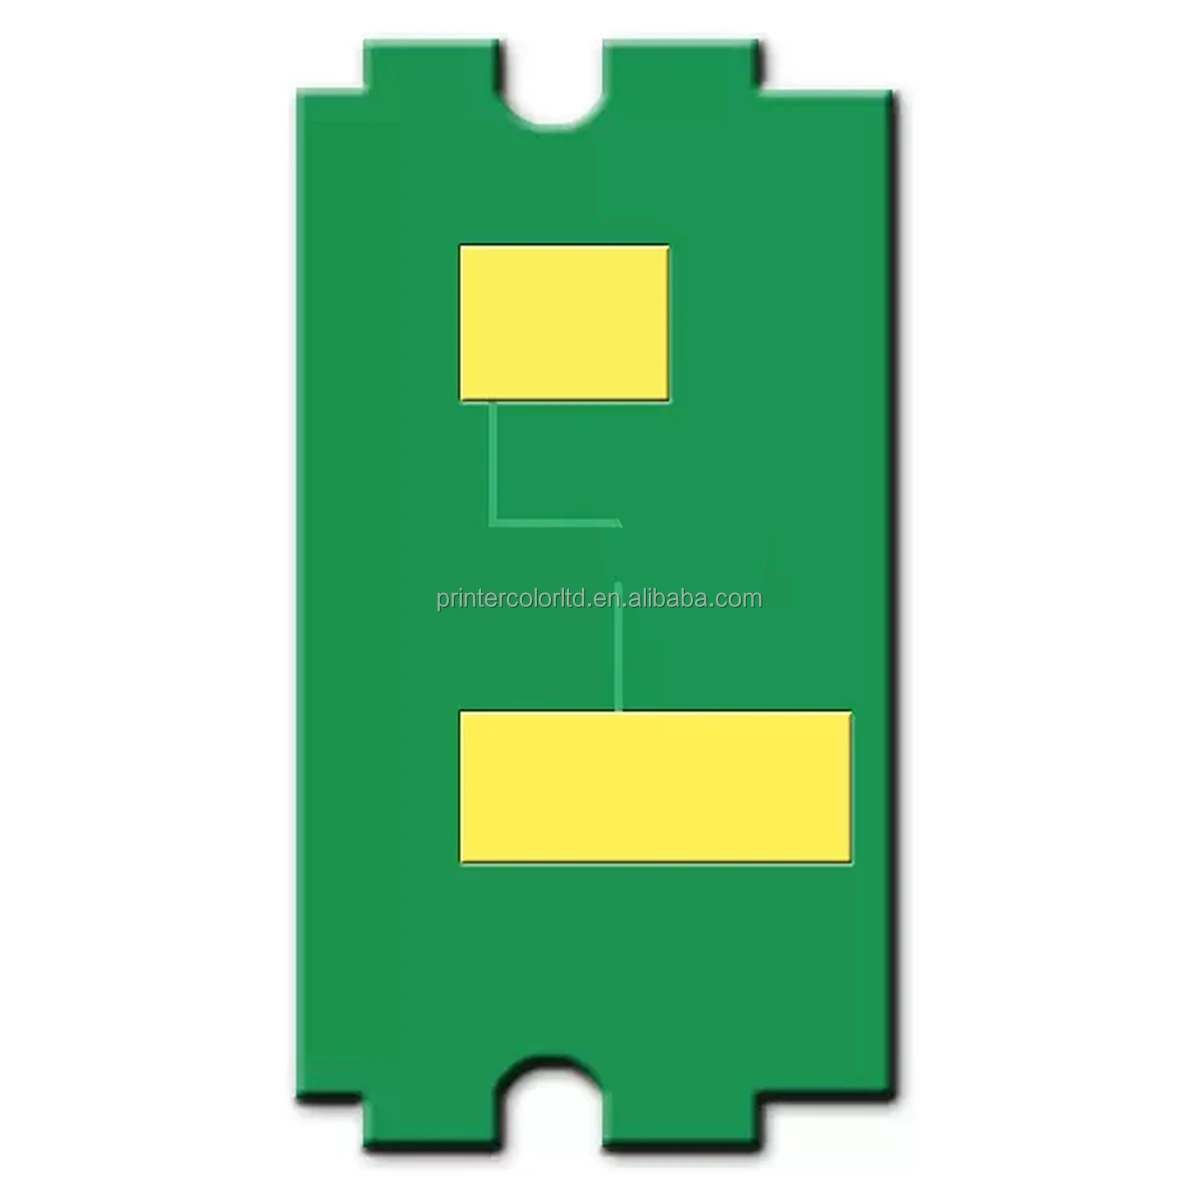 Source Toner Chip Refill Kits for Epson LP SD/LP SDN/LP